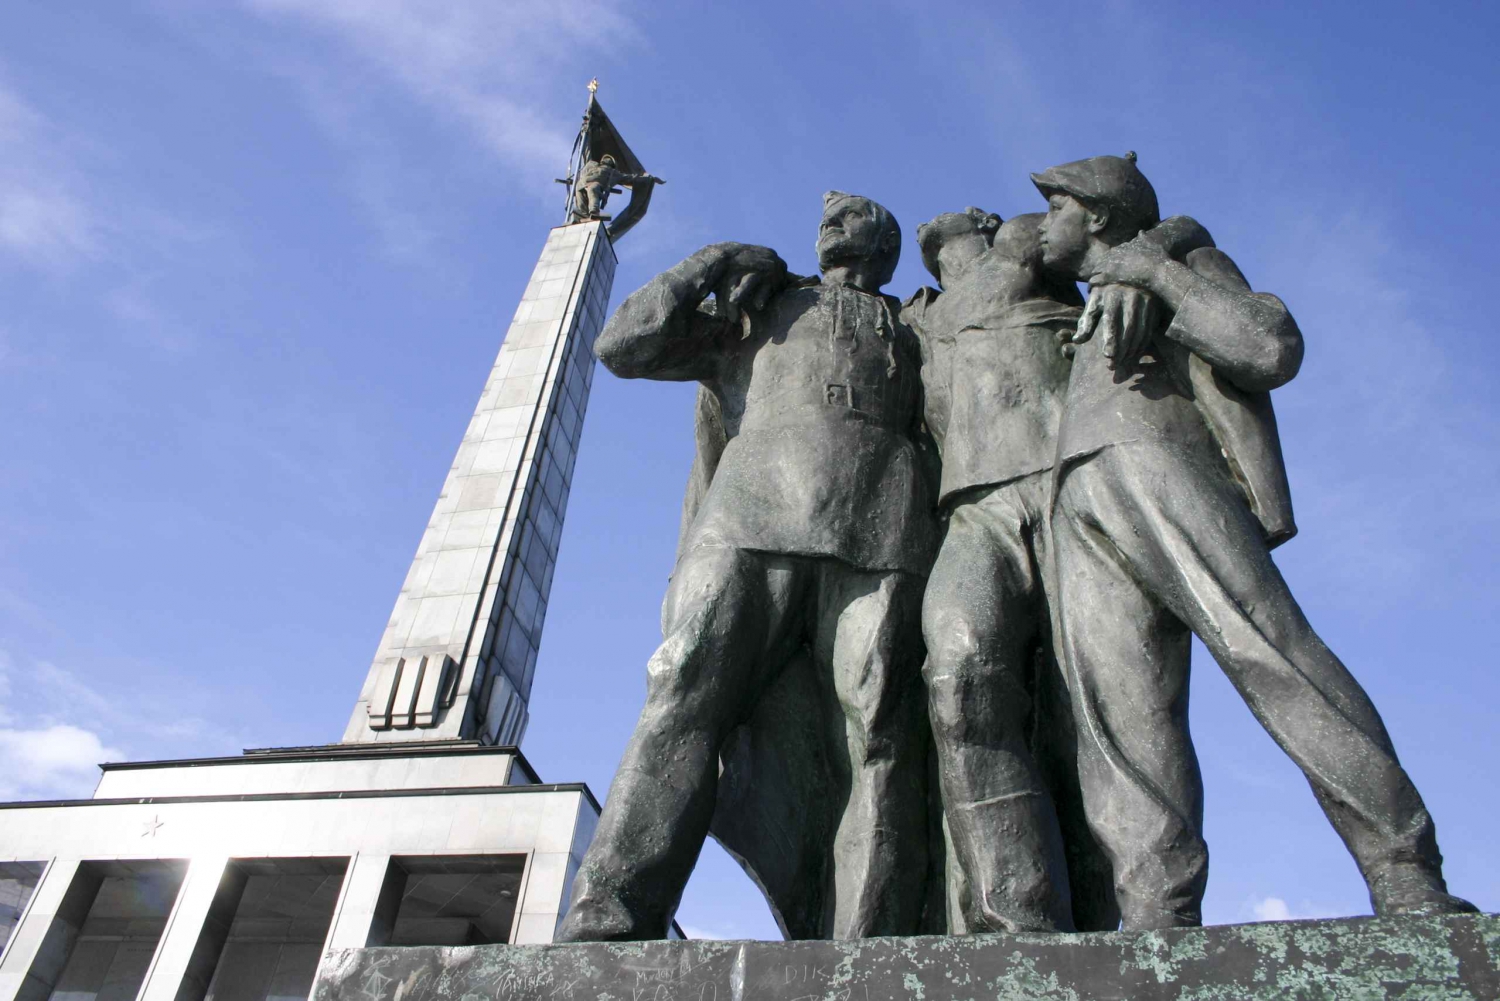 Bratislava: Soviet Era and Post-Communist Tour